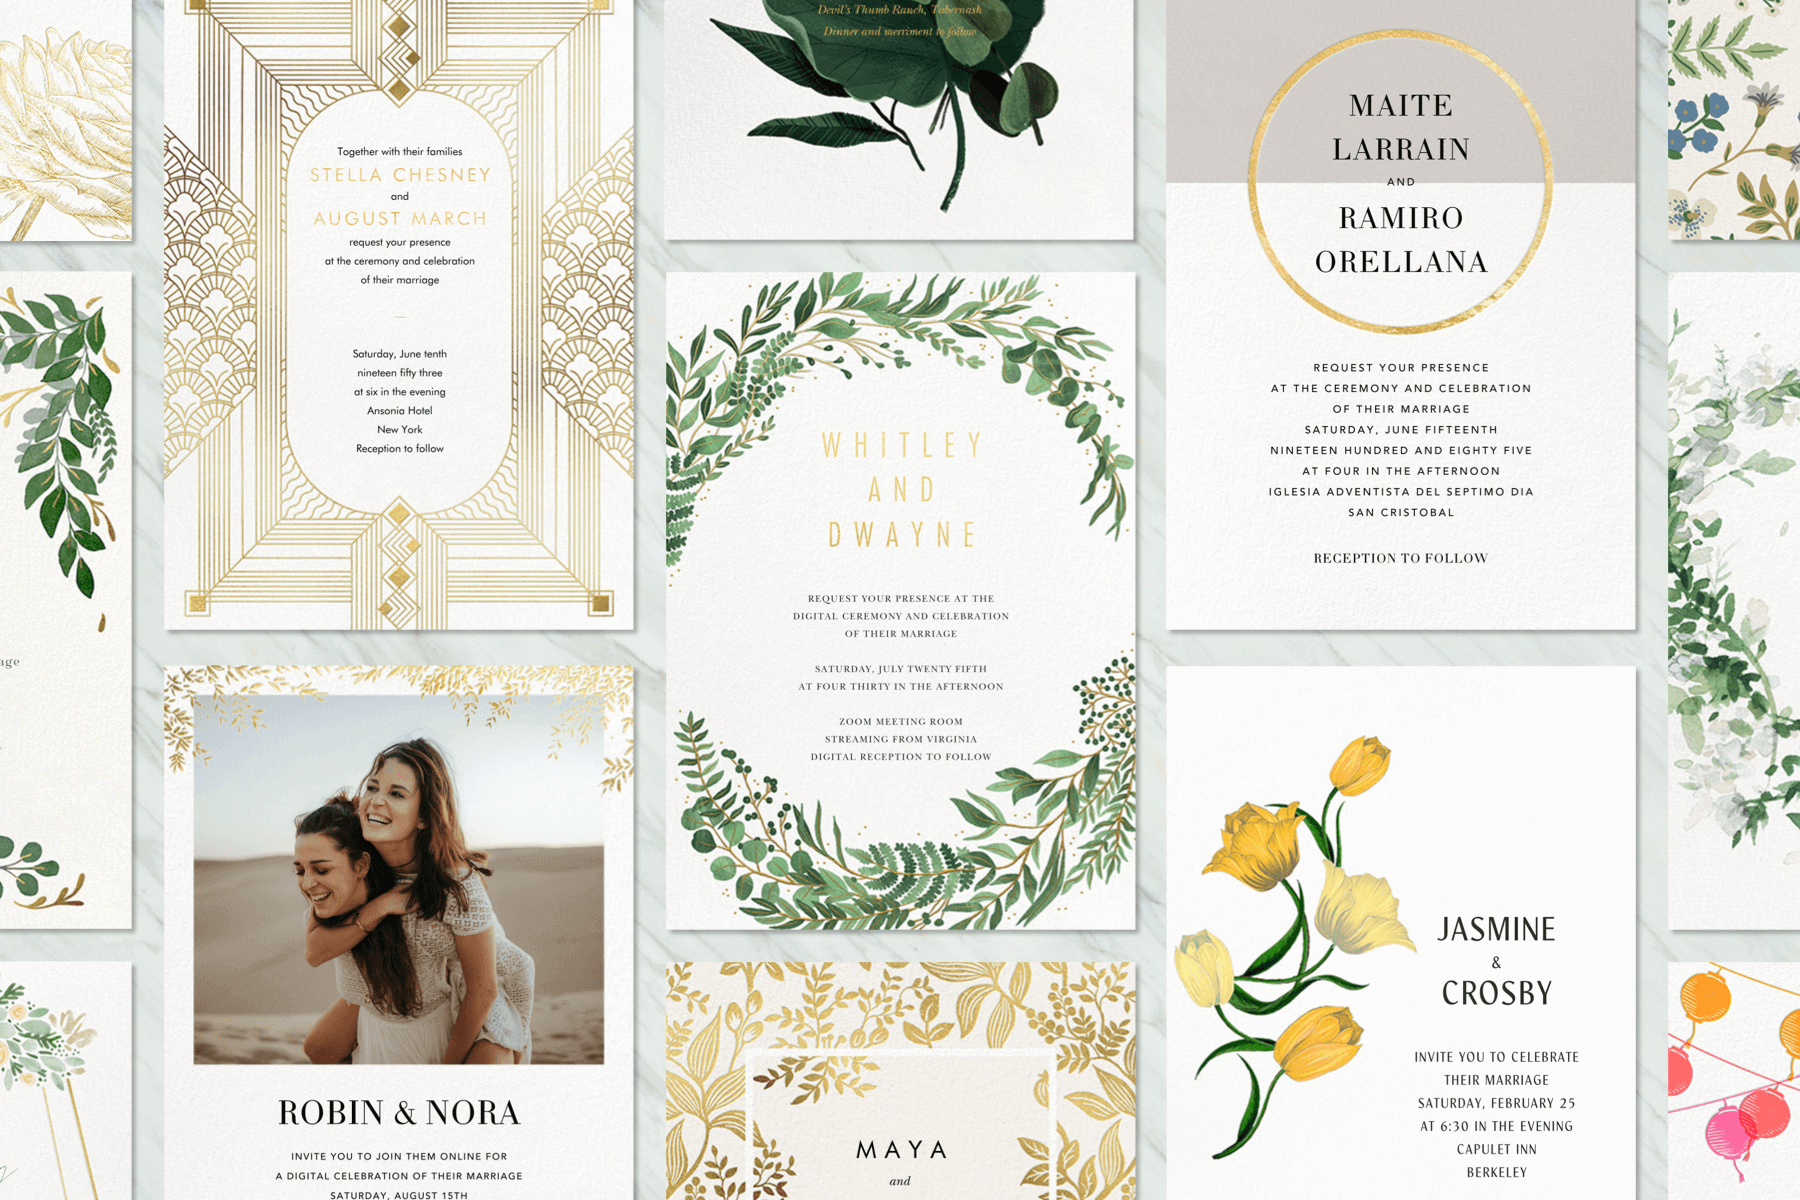 Paperless Post wedding invitations